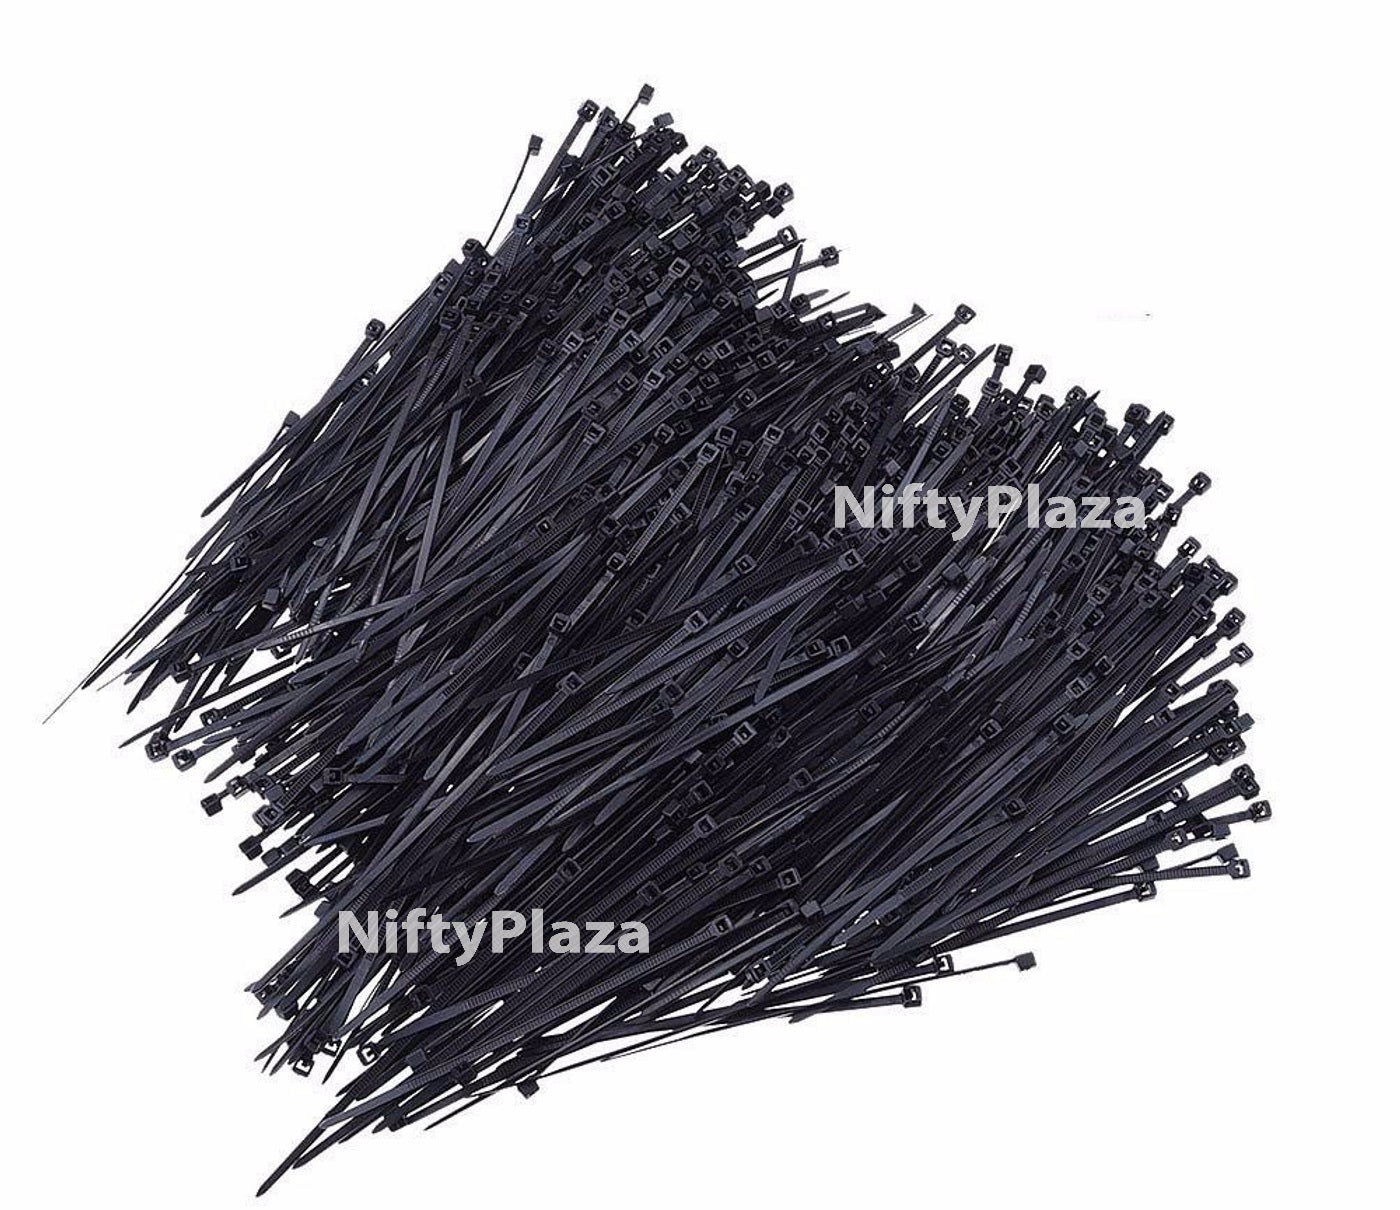 NiftyPlaza 4 Inch Cable Ties 1000 Pack UV Weather Resistant 18 LBs Zip Ties